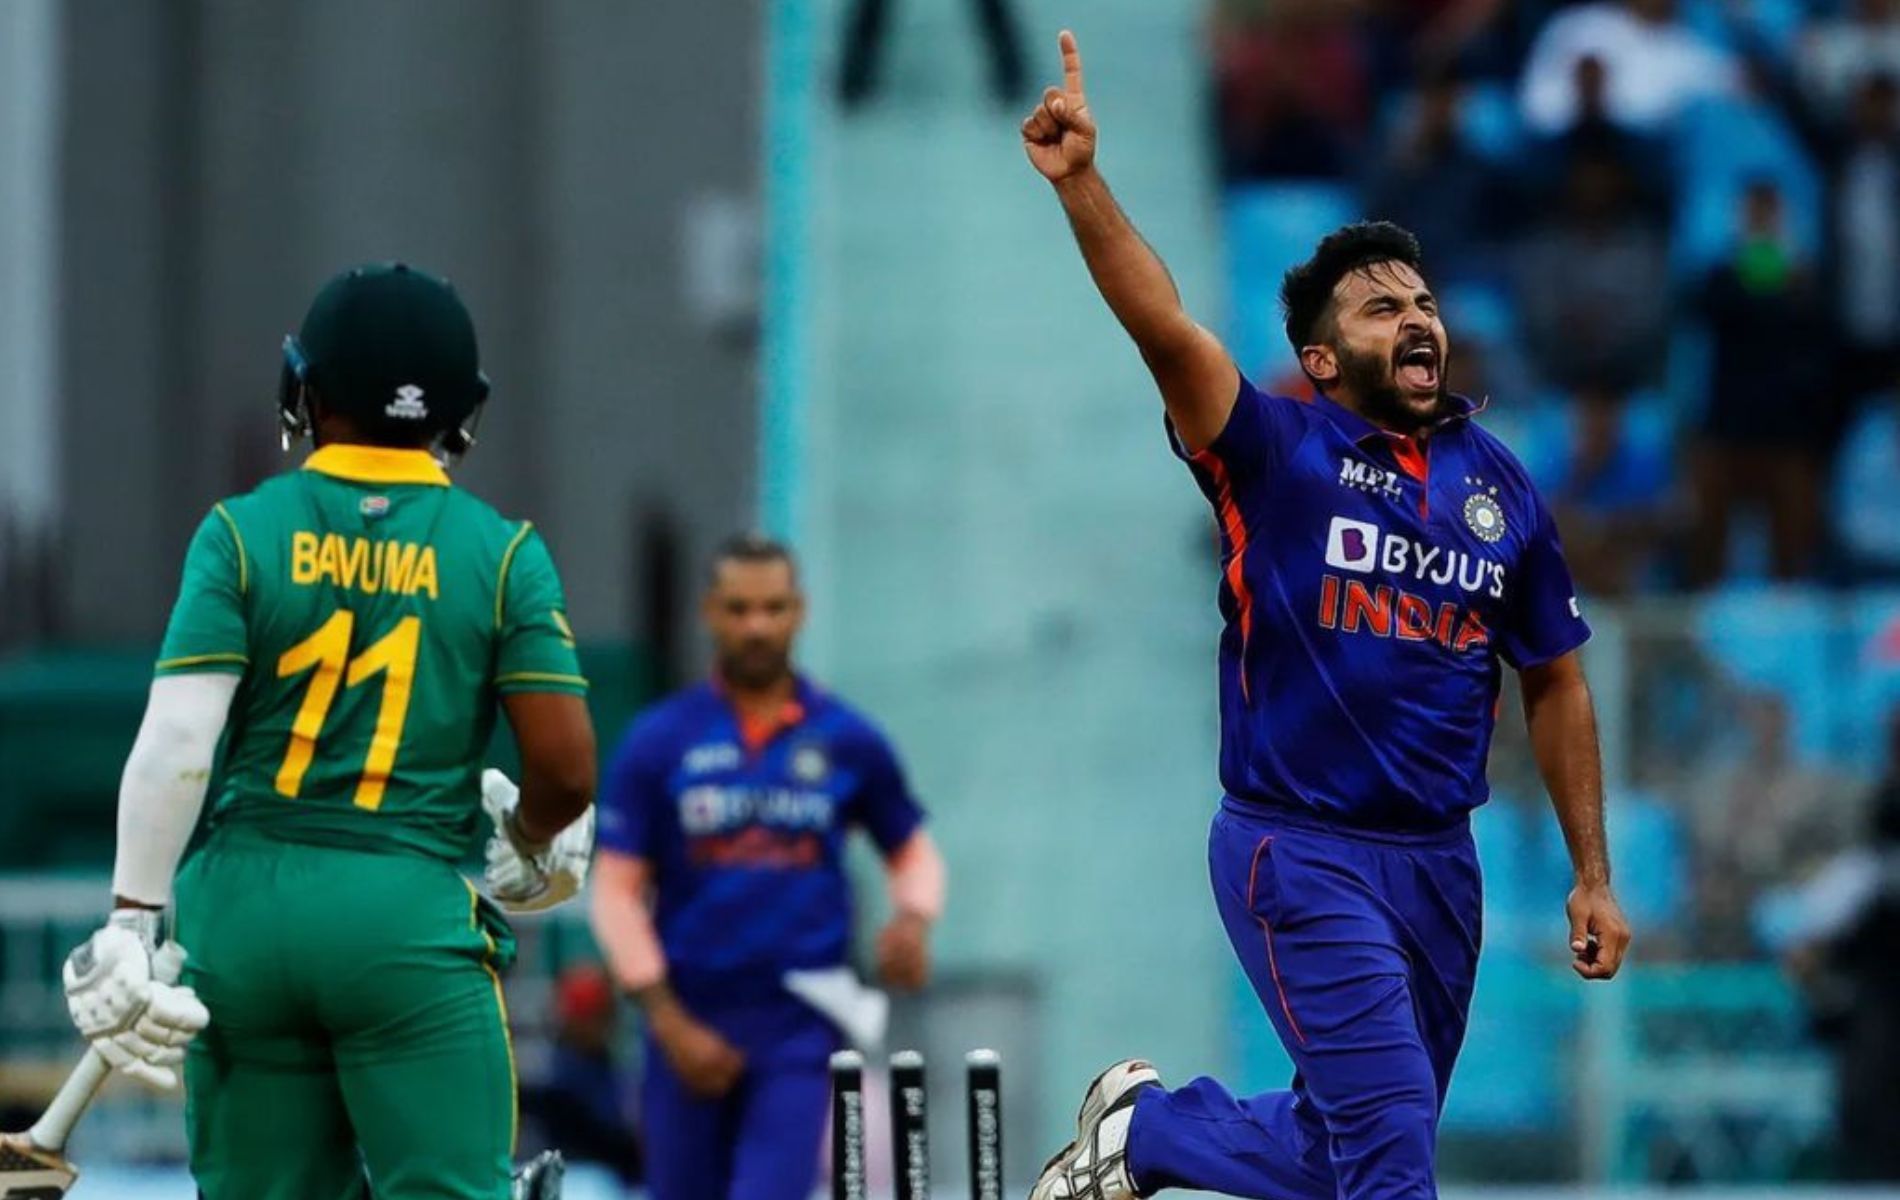 Shardul Thakur (R) celebrates a wicket. (Pic: Instagram)